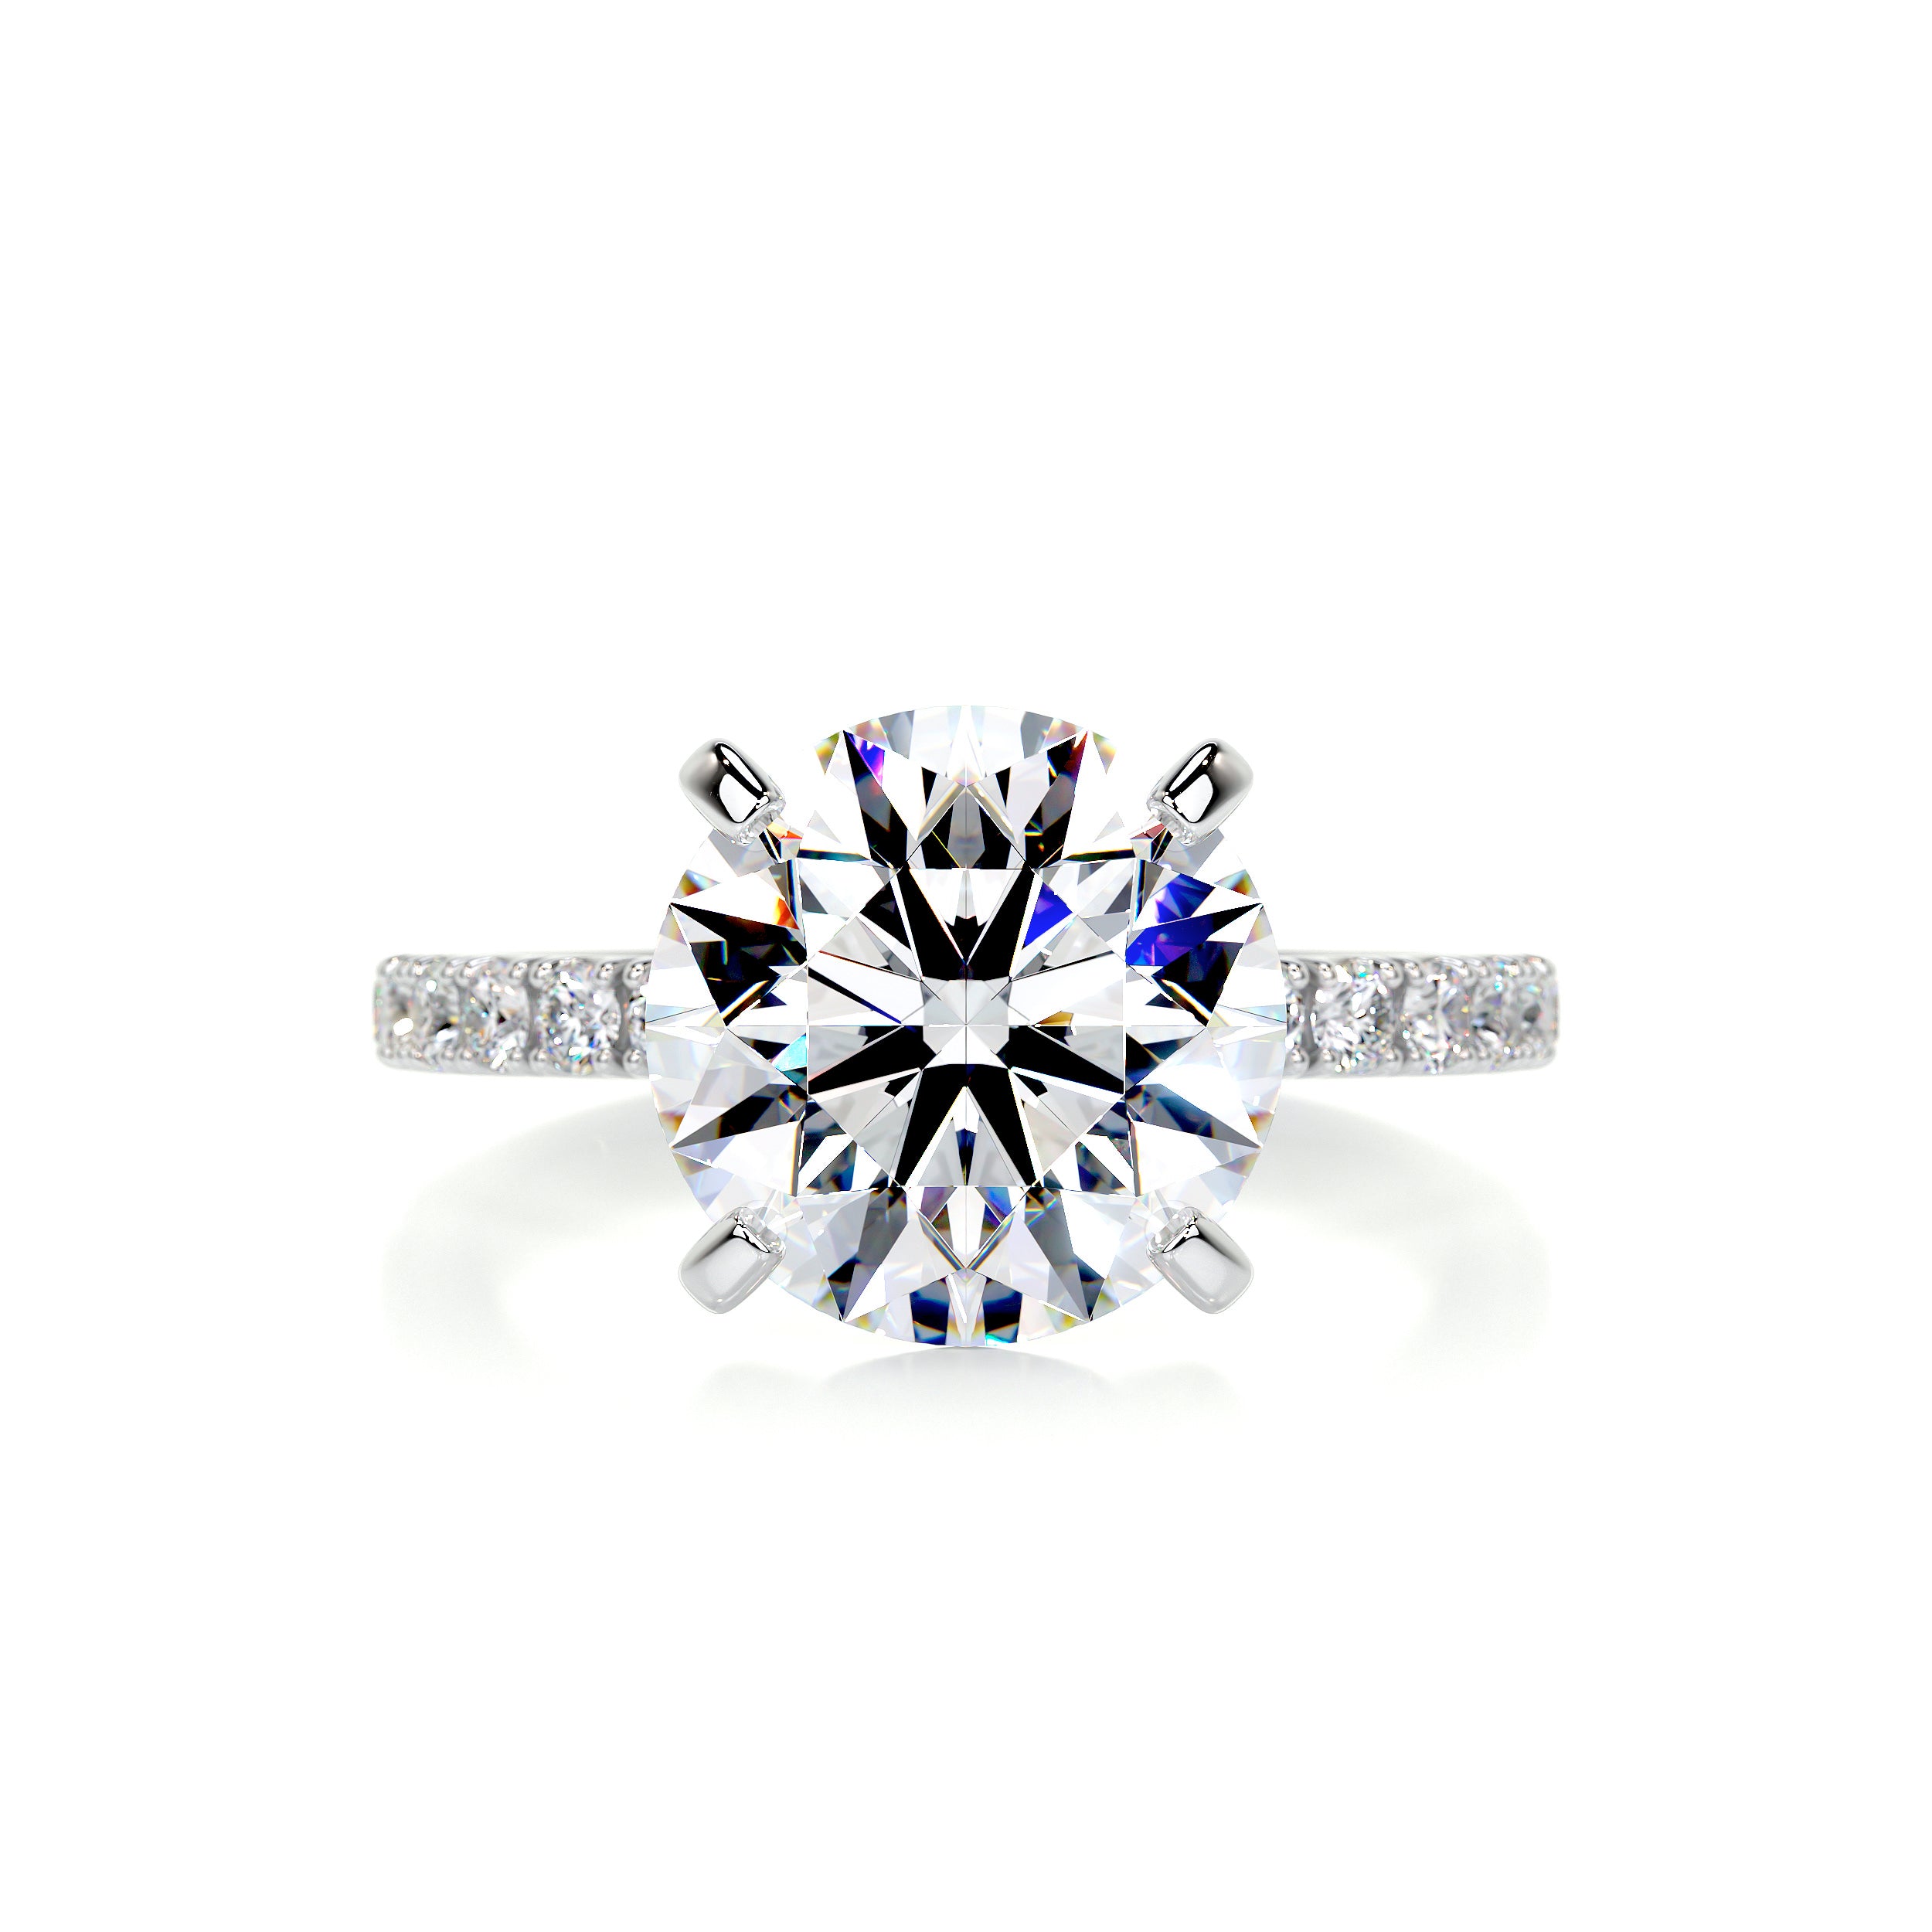 Alison Moissanite & Diamonds Ring   (5.5 Carat) -14K White Gold